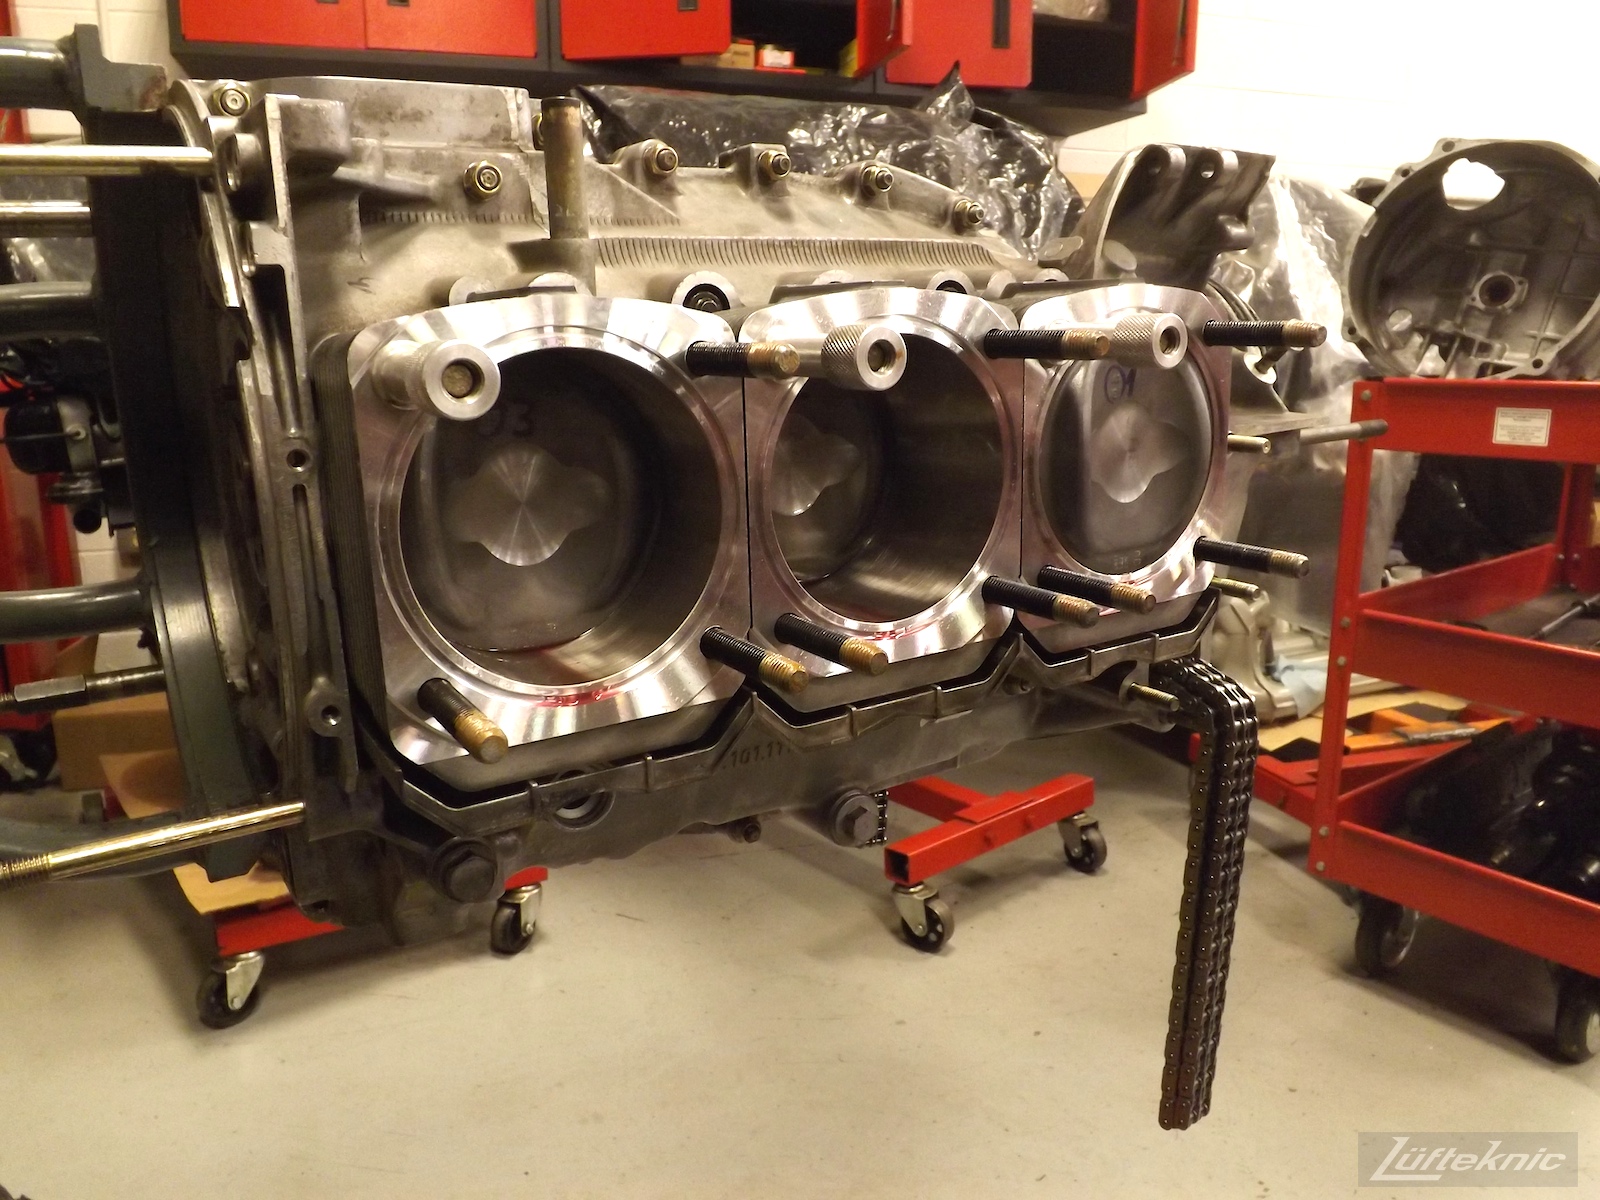 Freshly rebuilt 993 Turbo motor with pistons installed.